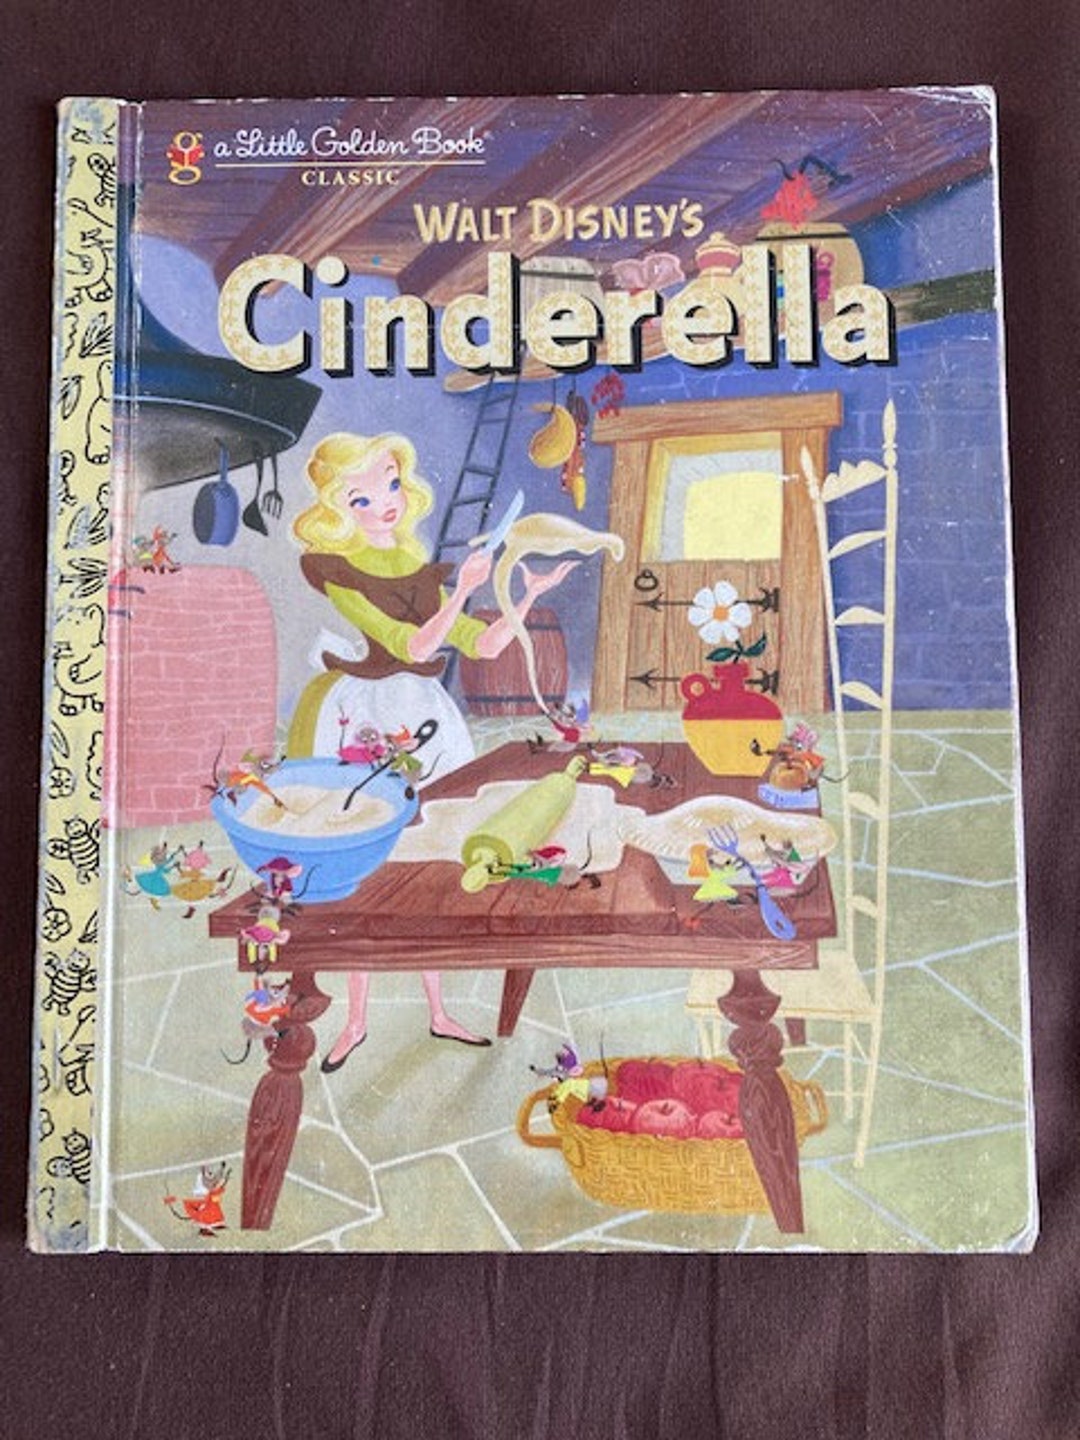 Disney cendrillon - album illustre - l'histoire du film, jeux educatifs